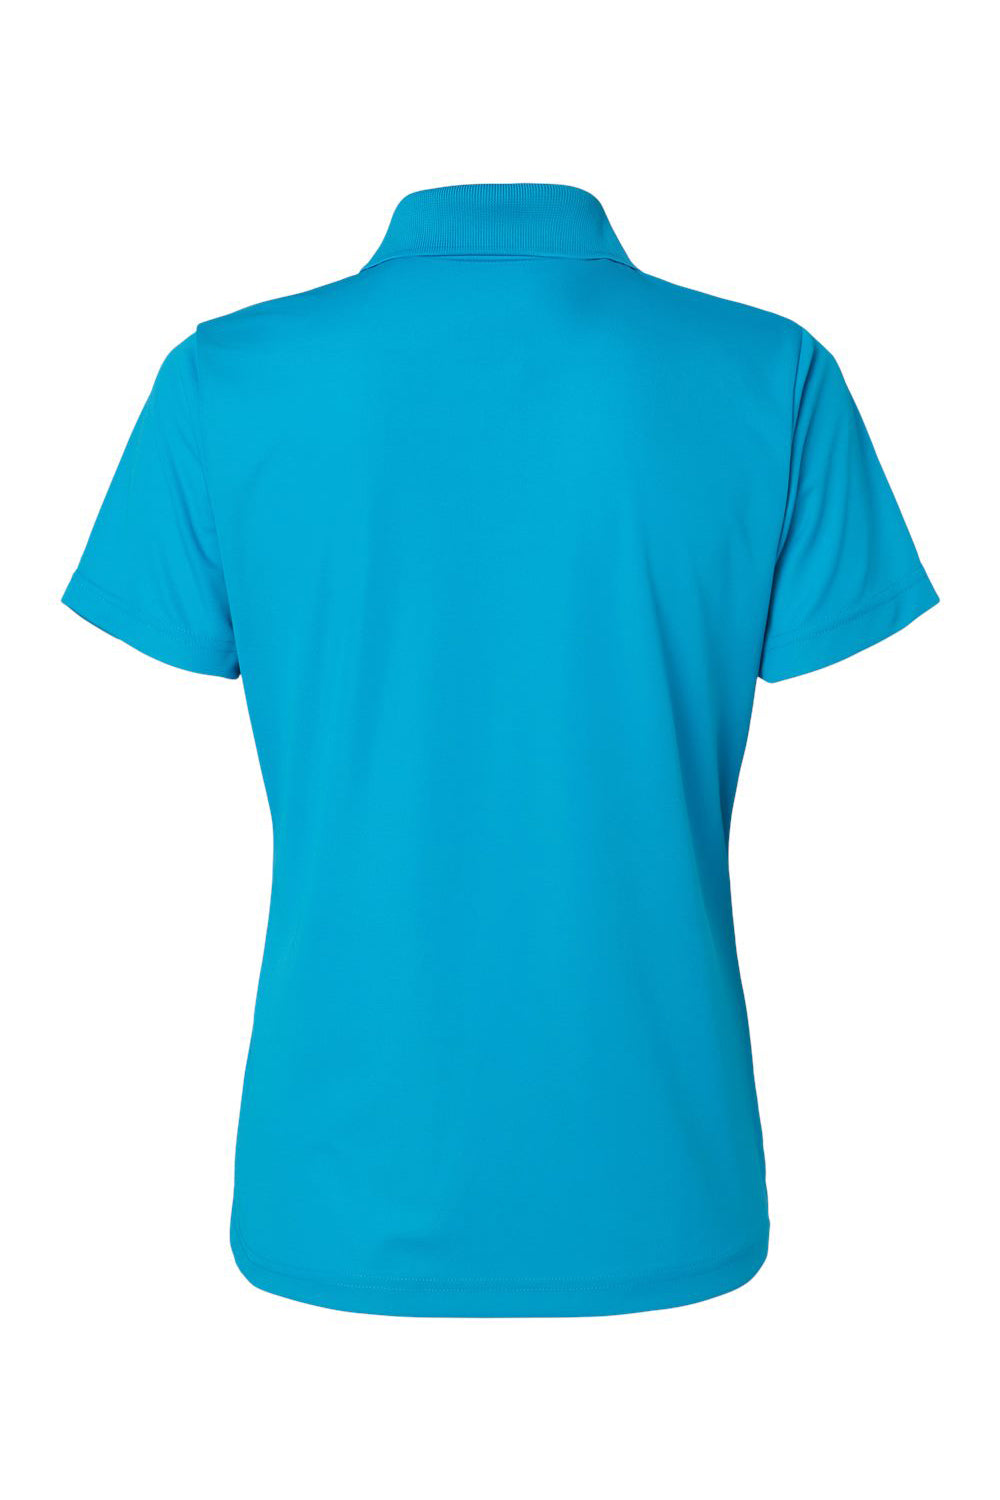 Paragon 504 Womens Sebring Performance Short Sleeve Polo Shirt Turquoise Blue Flat Back